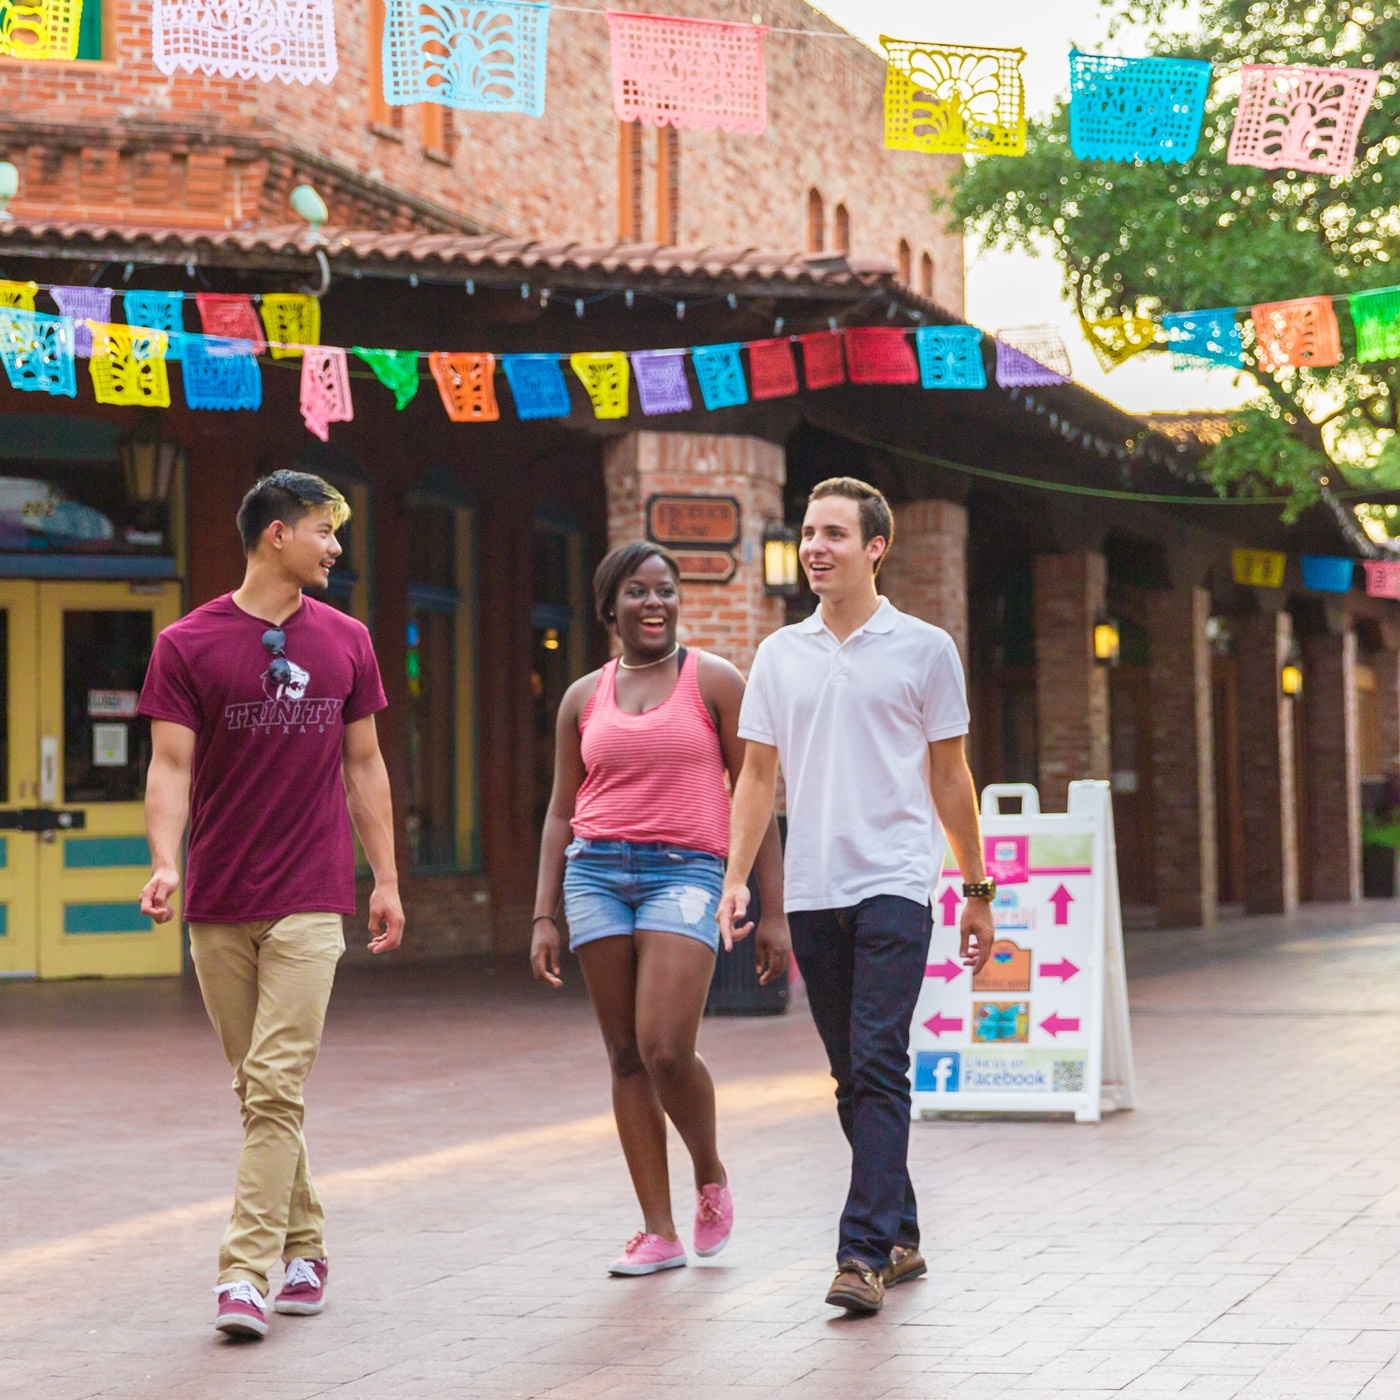 three ԰ students walk through Market Square under papel picado